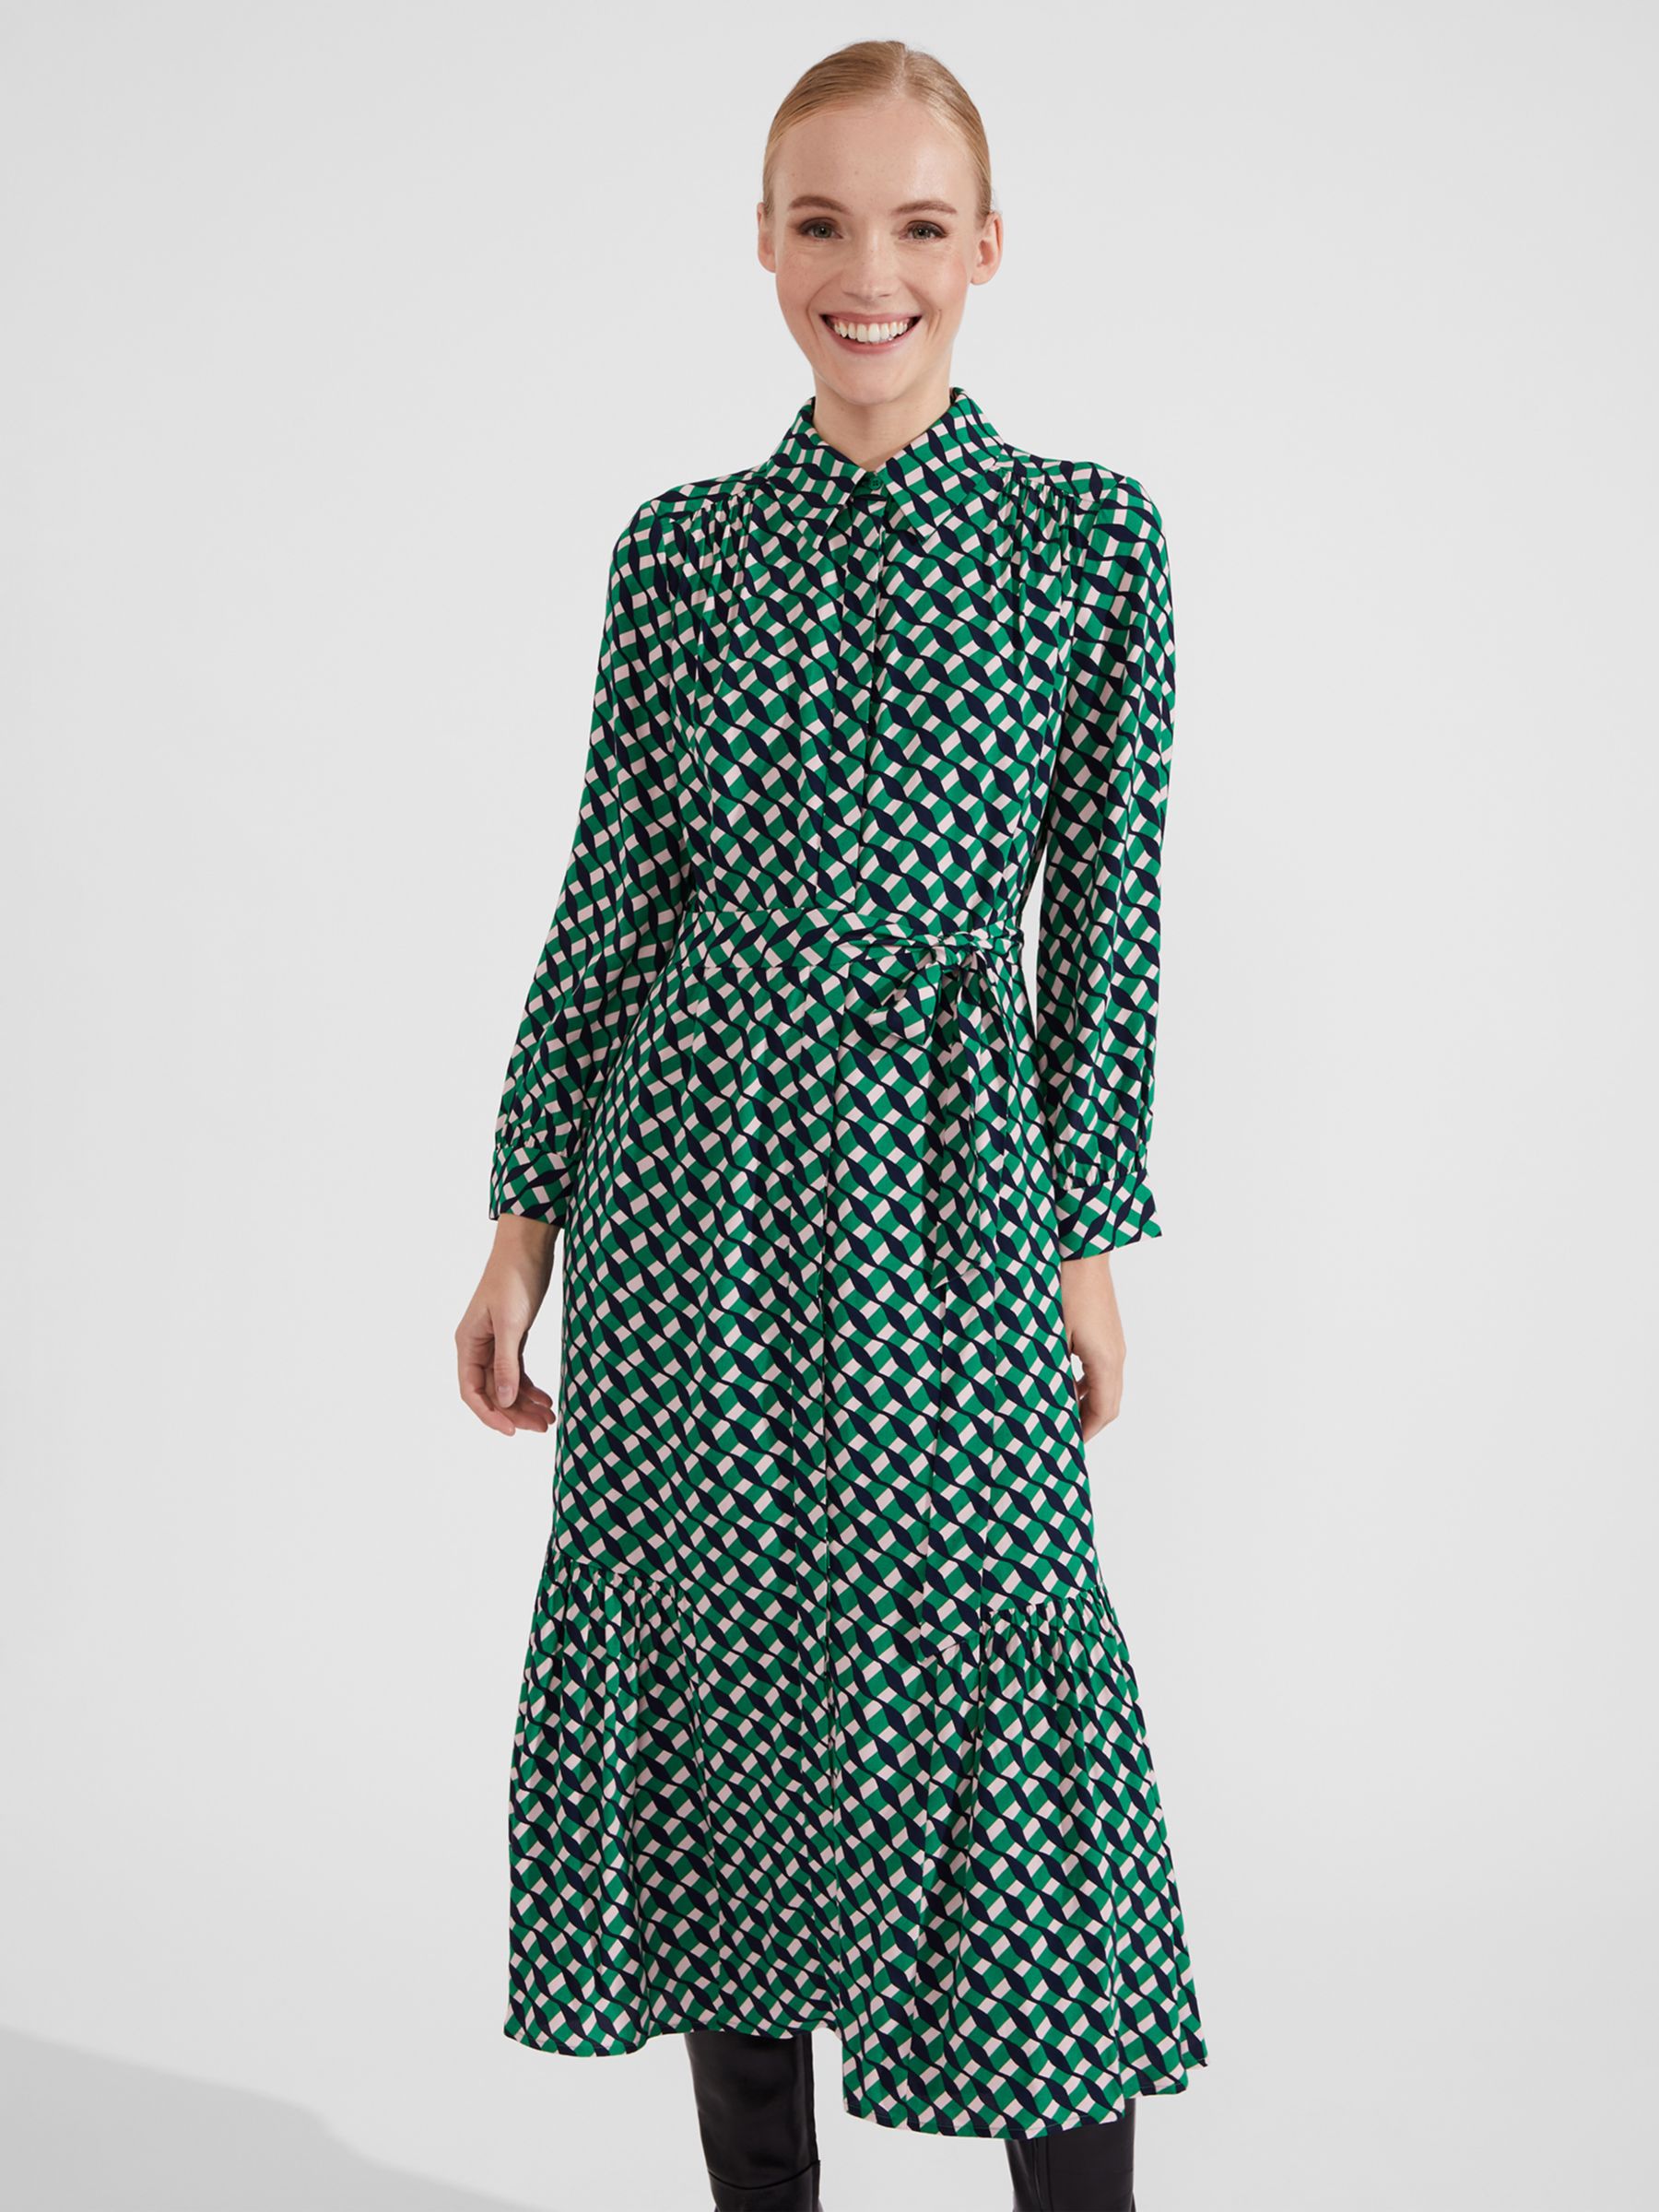 Hobbs Emberly Shirt Midi Dress, Green/Multi at John Lewis & Partners